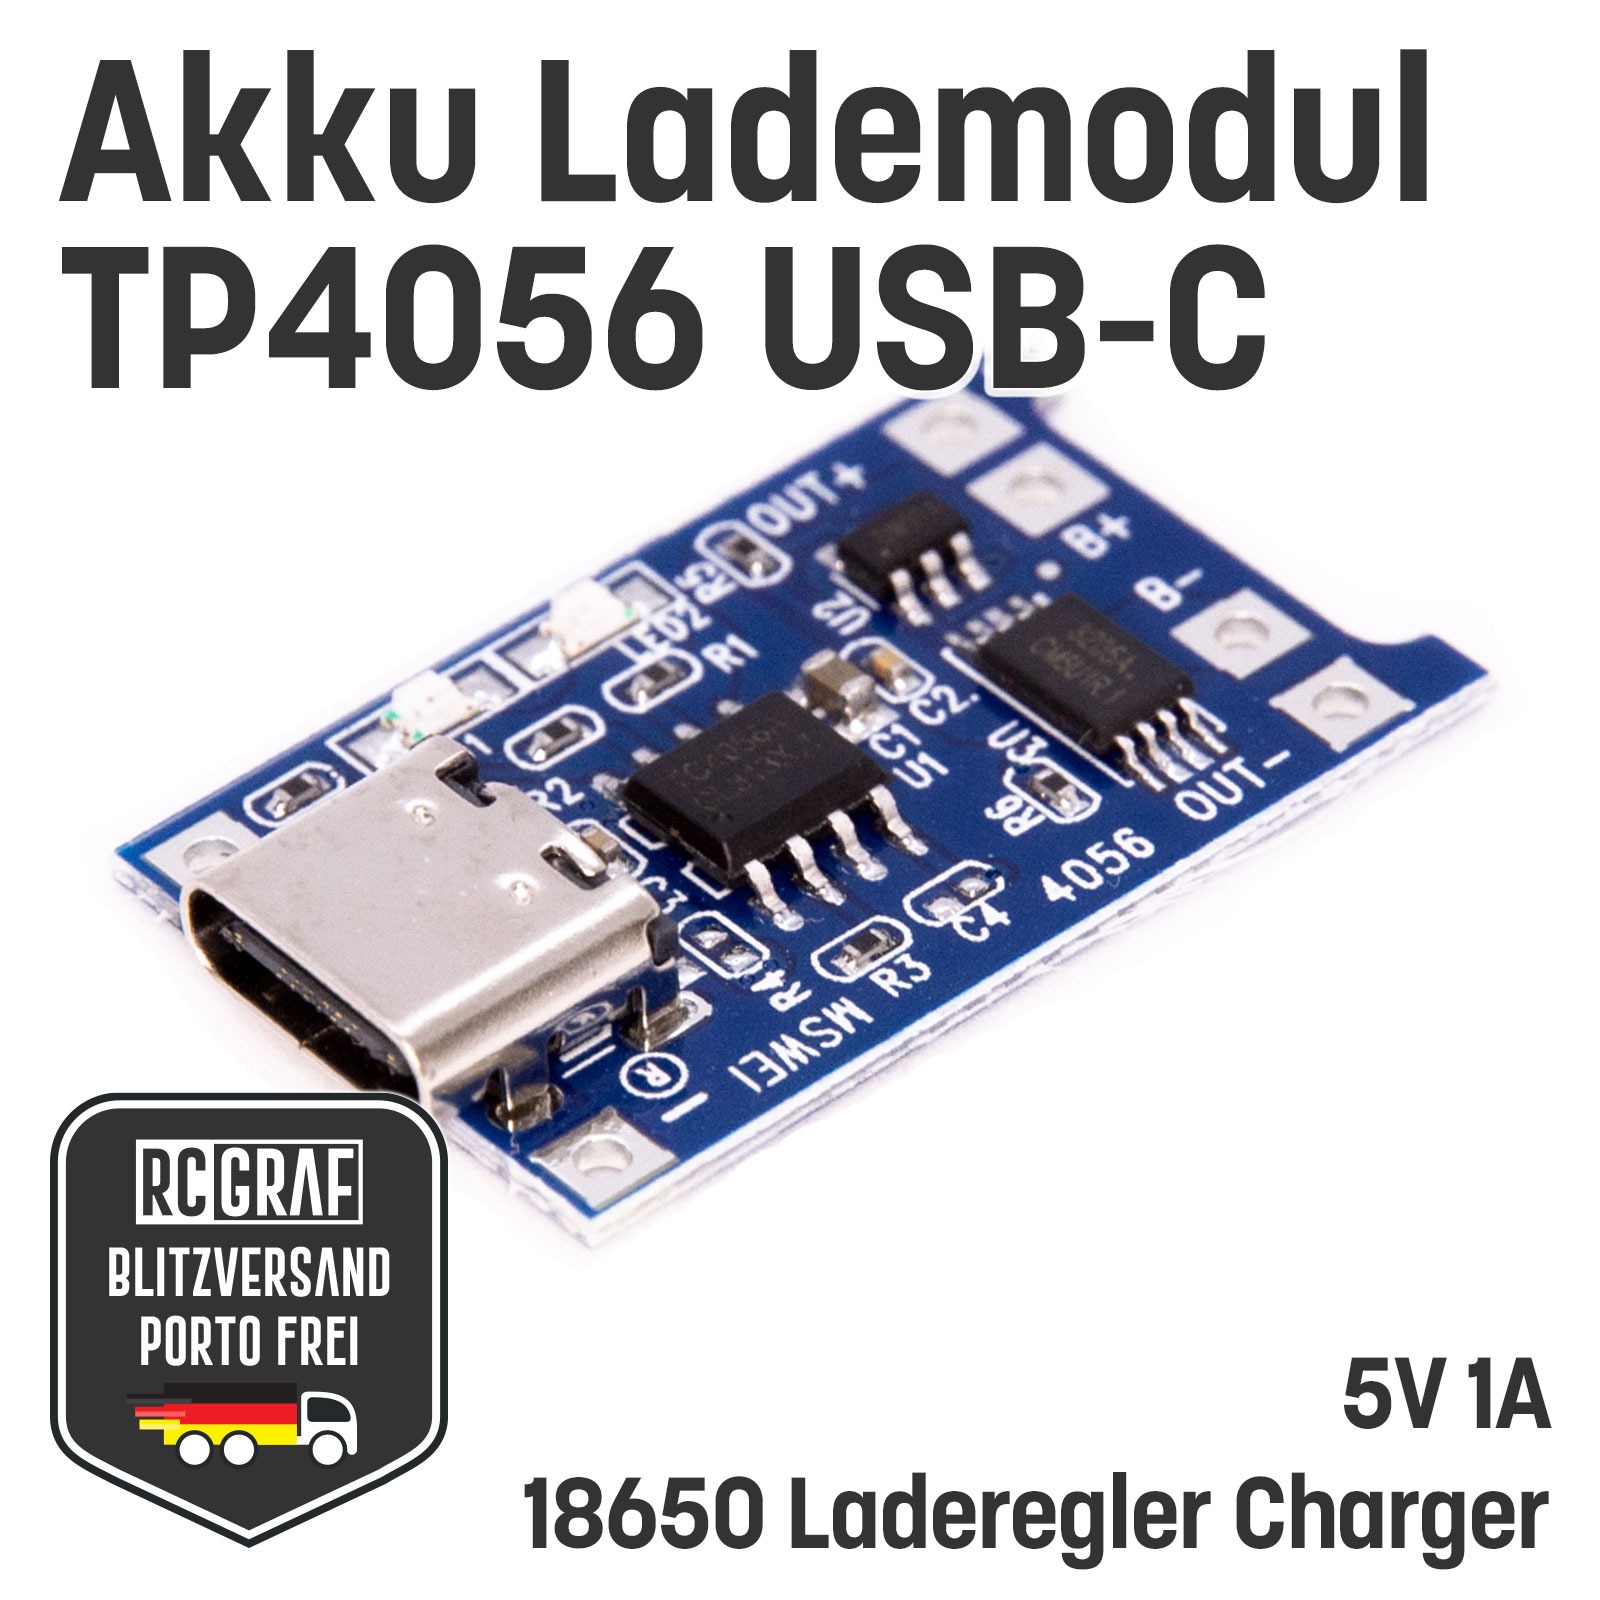 1x Akku Lademodul 5V 1A TP4056 USB C 2